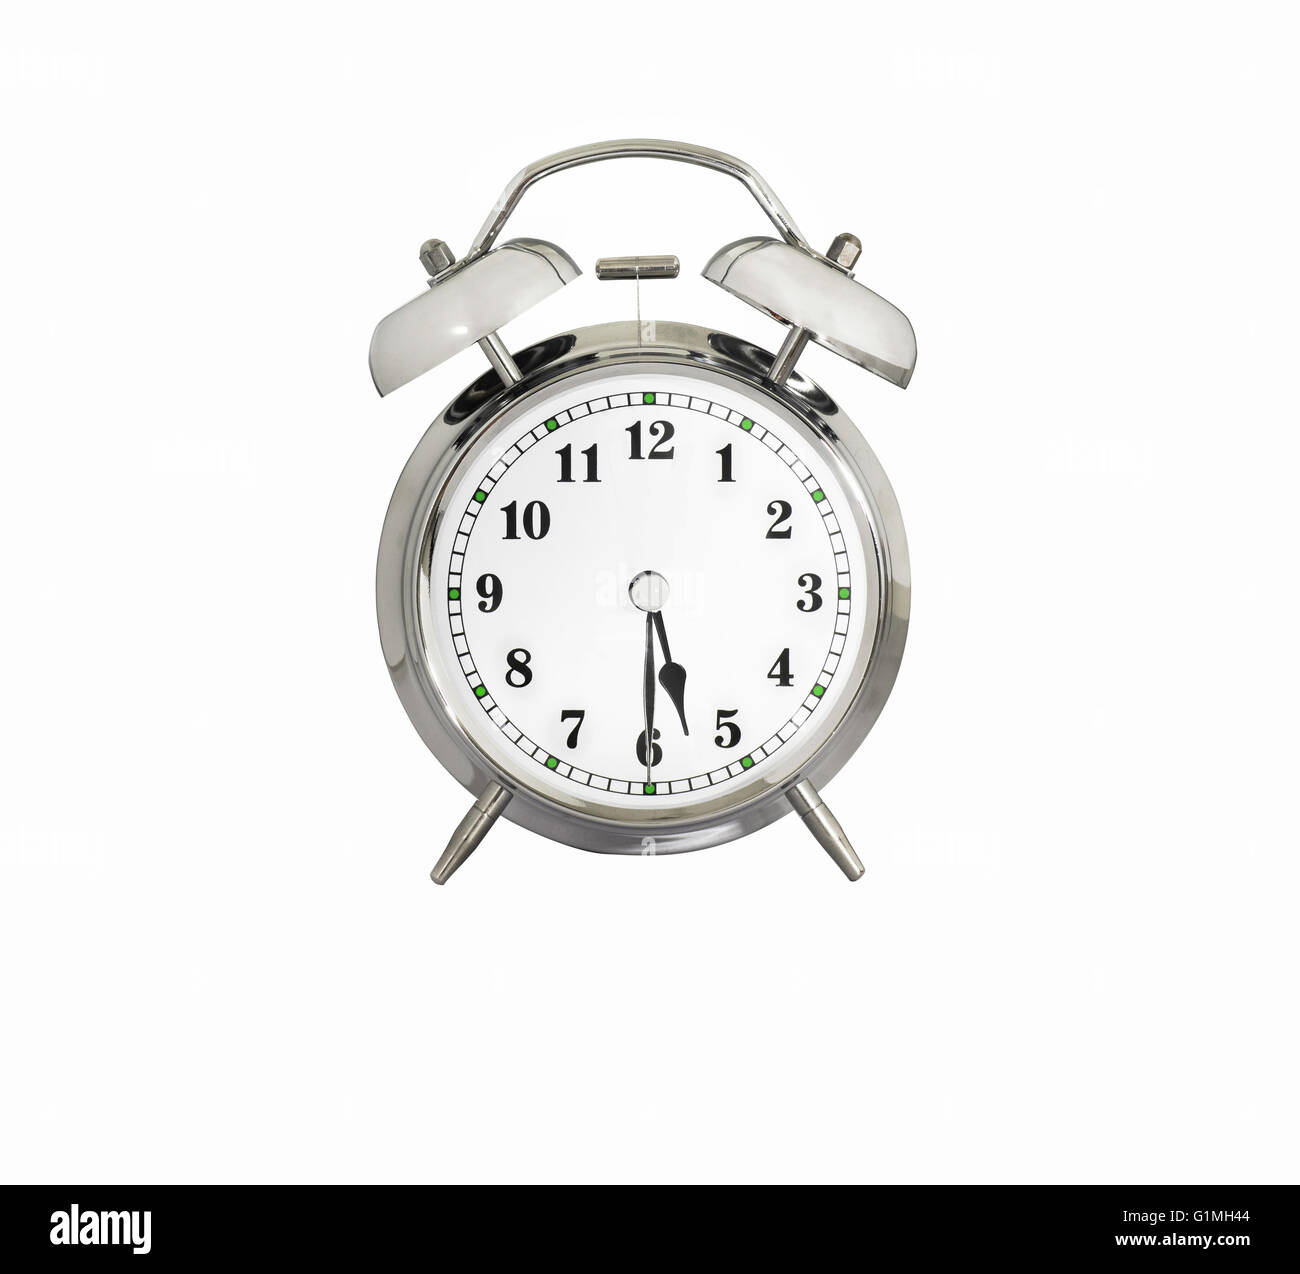 Traditional Alarm Clock Showing 5 30 Stock Photo Alamy